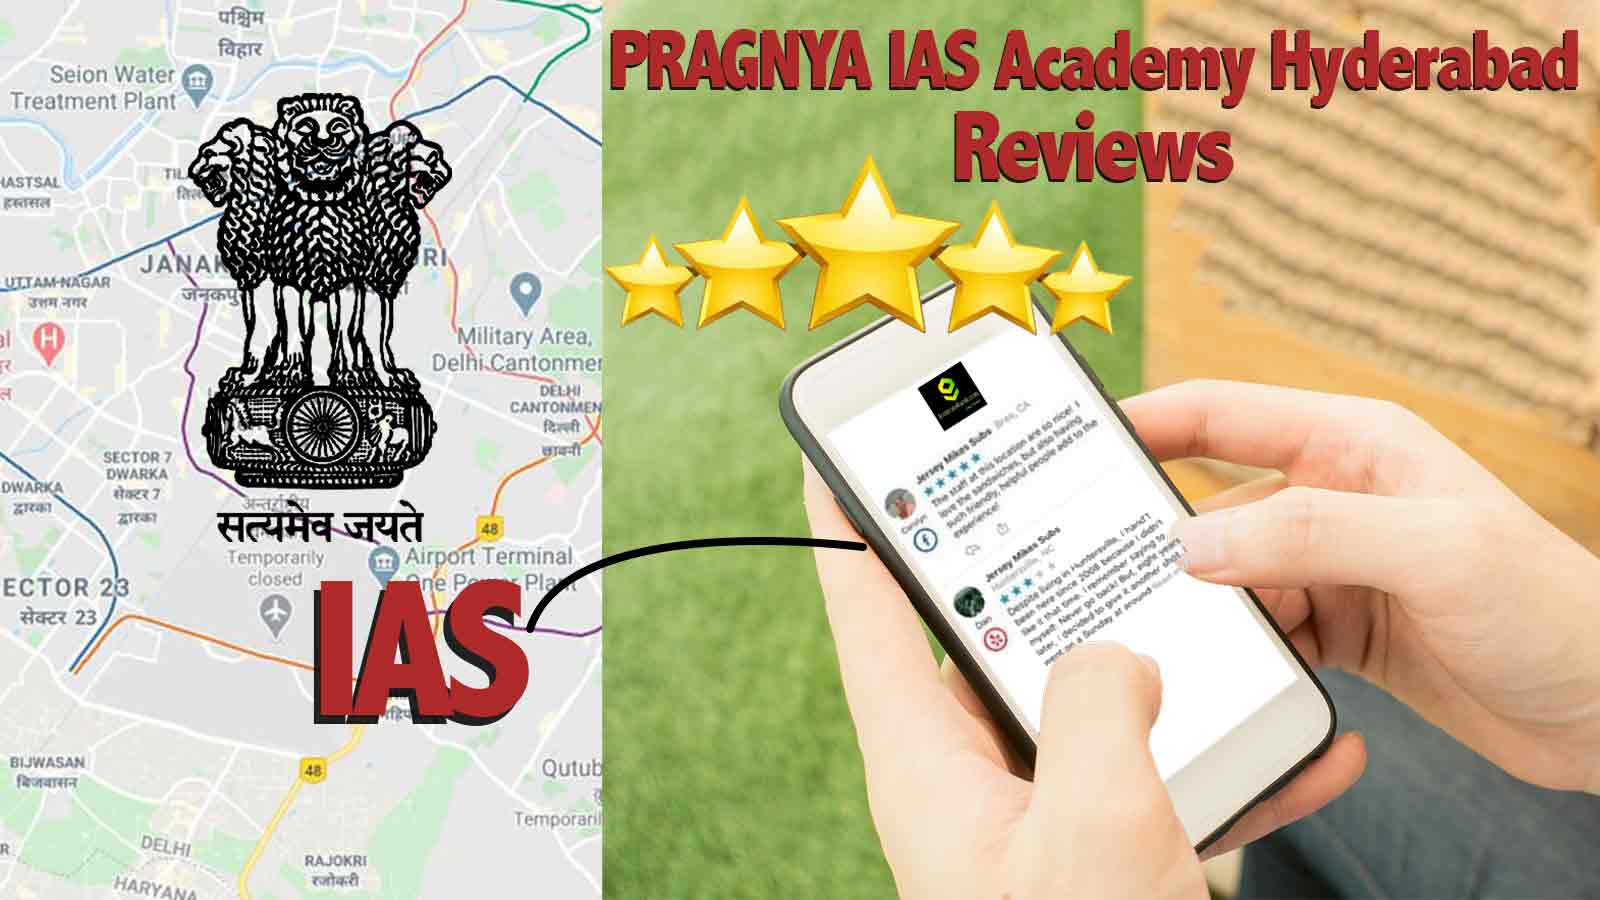 Pragnya IAS Academy Hyderabad Reviews